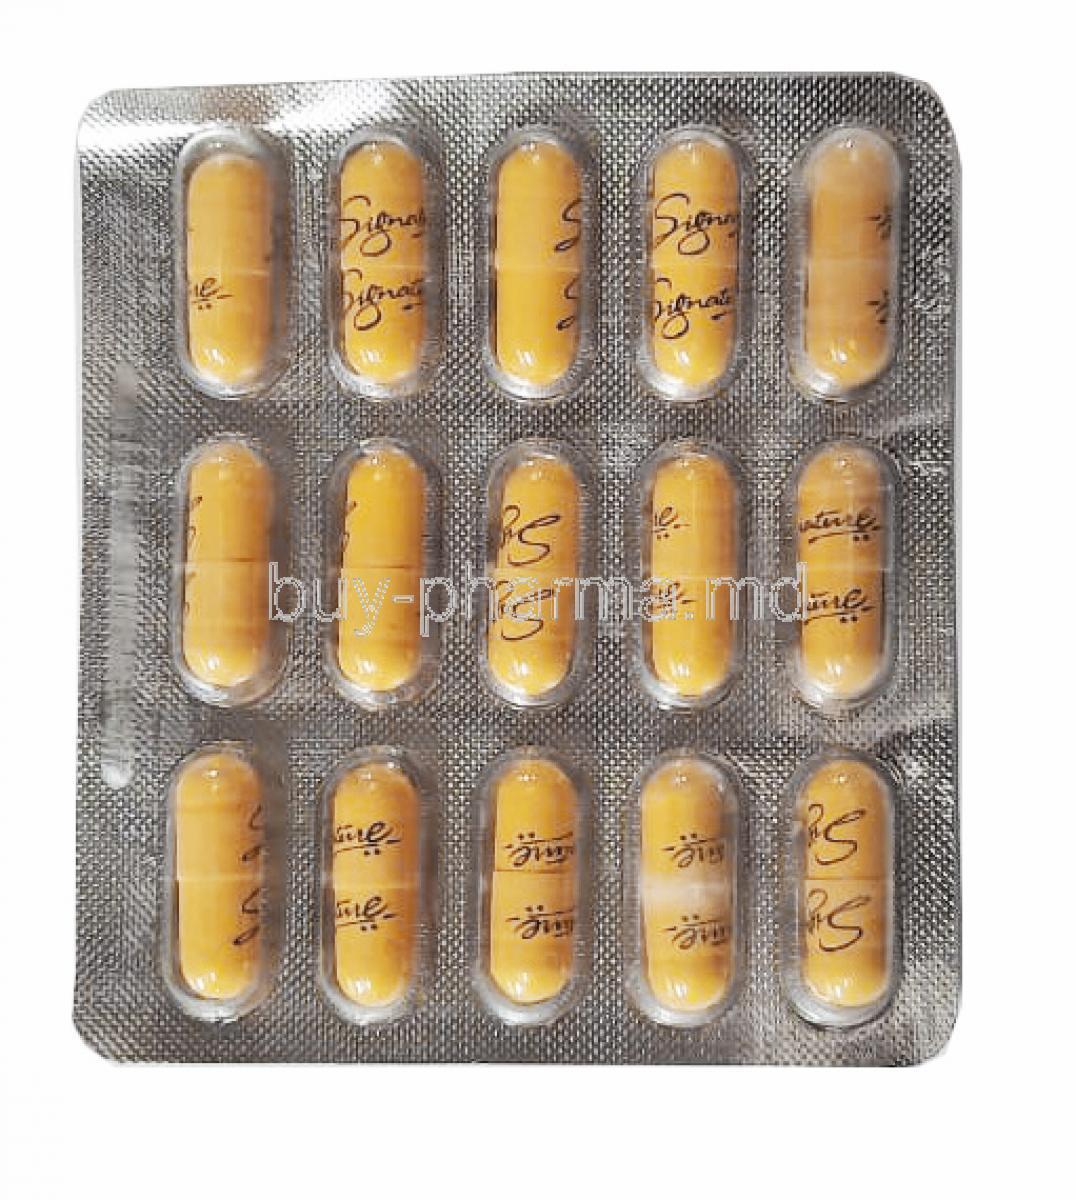 Zylomox, Amoxycillin 500mg capsule